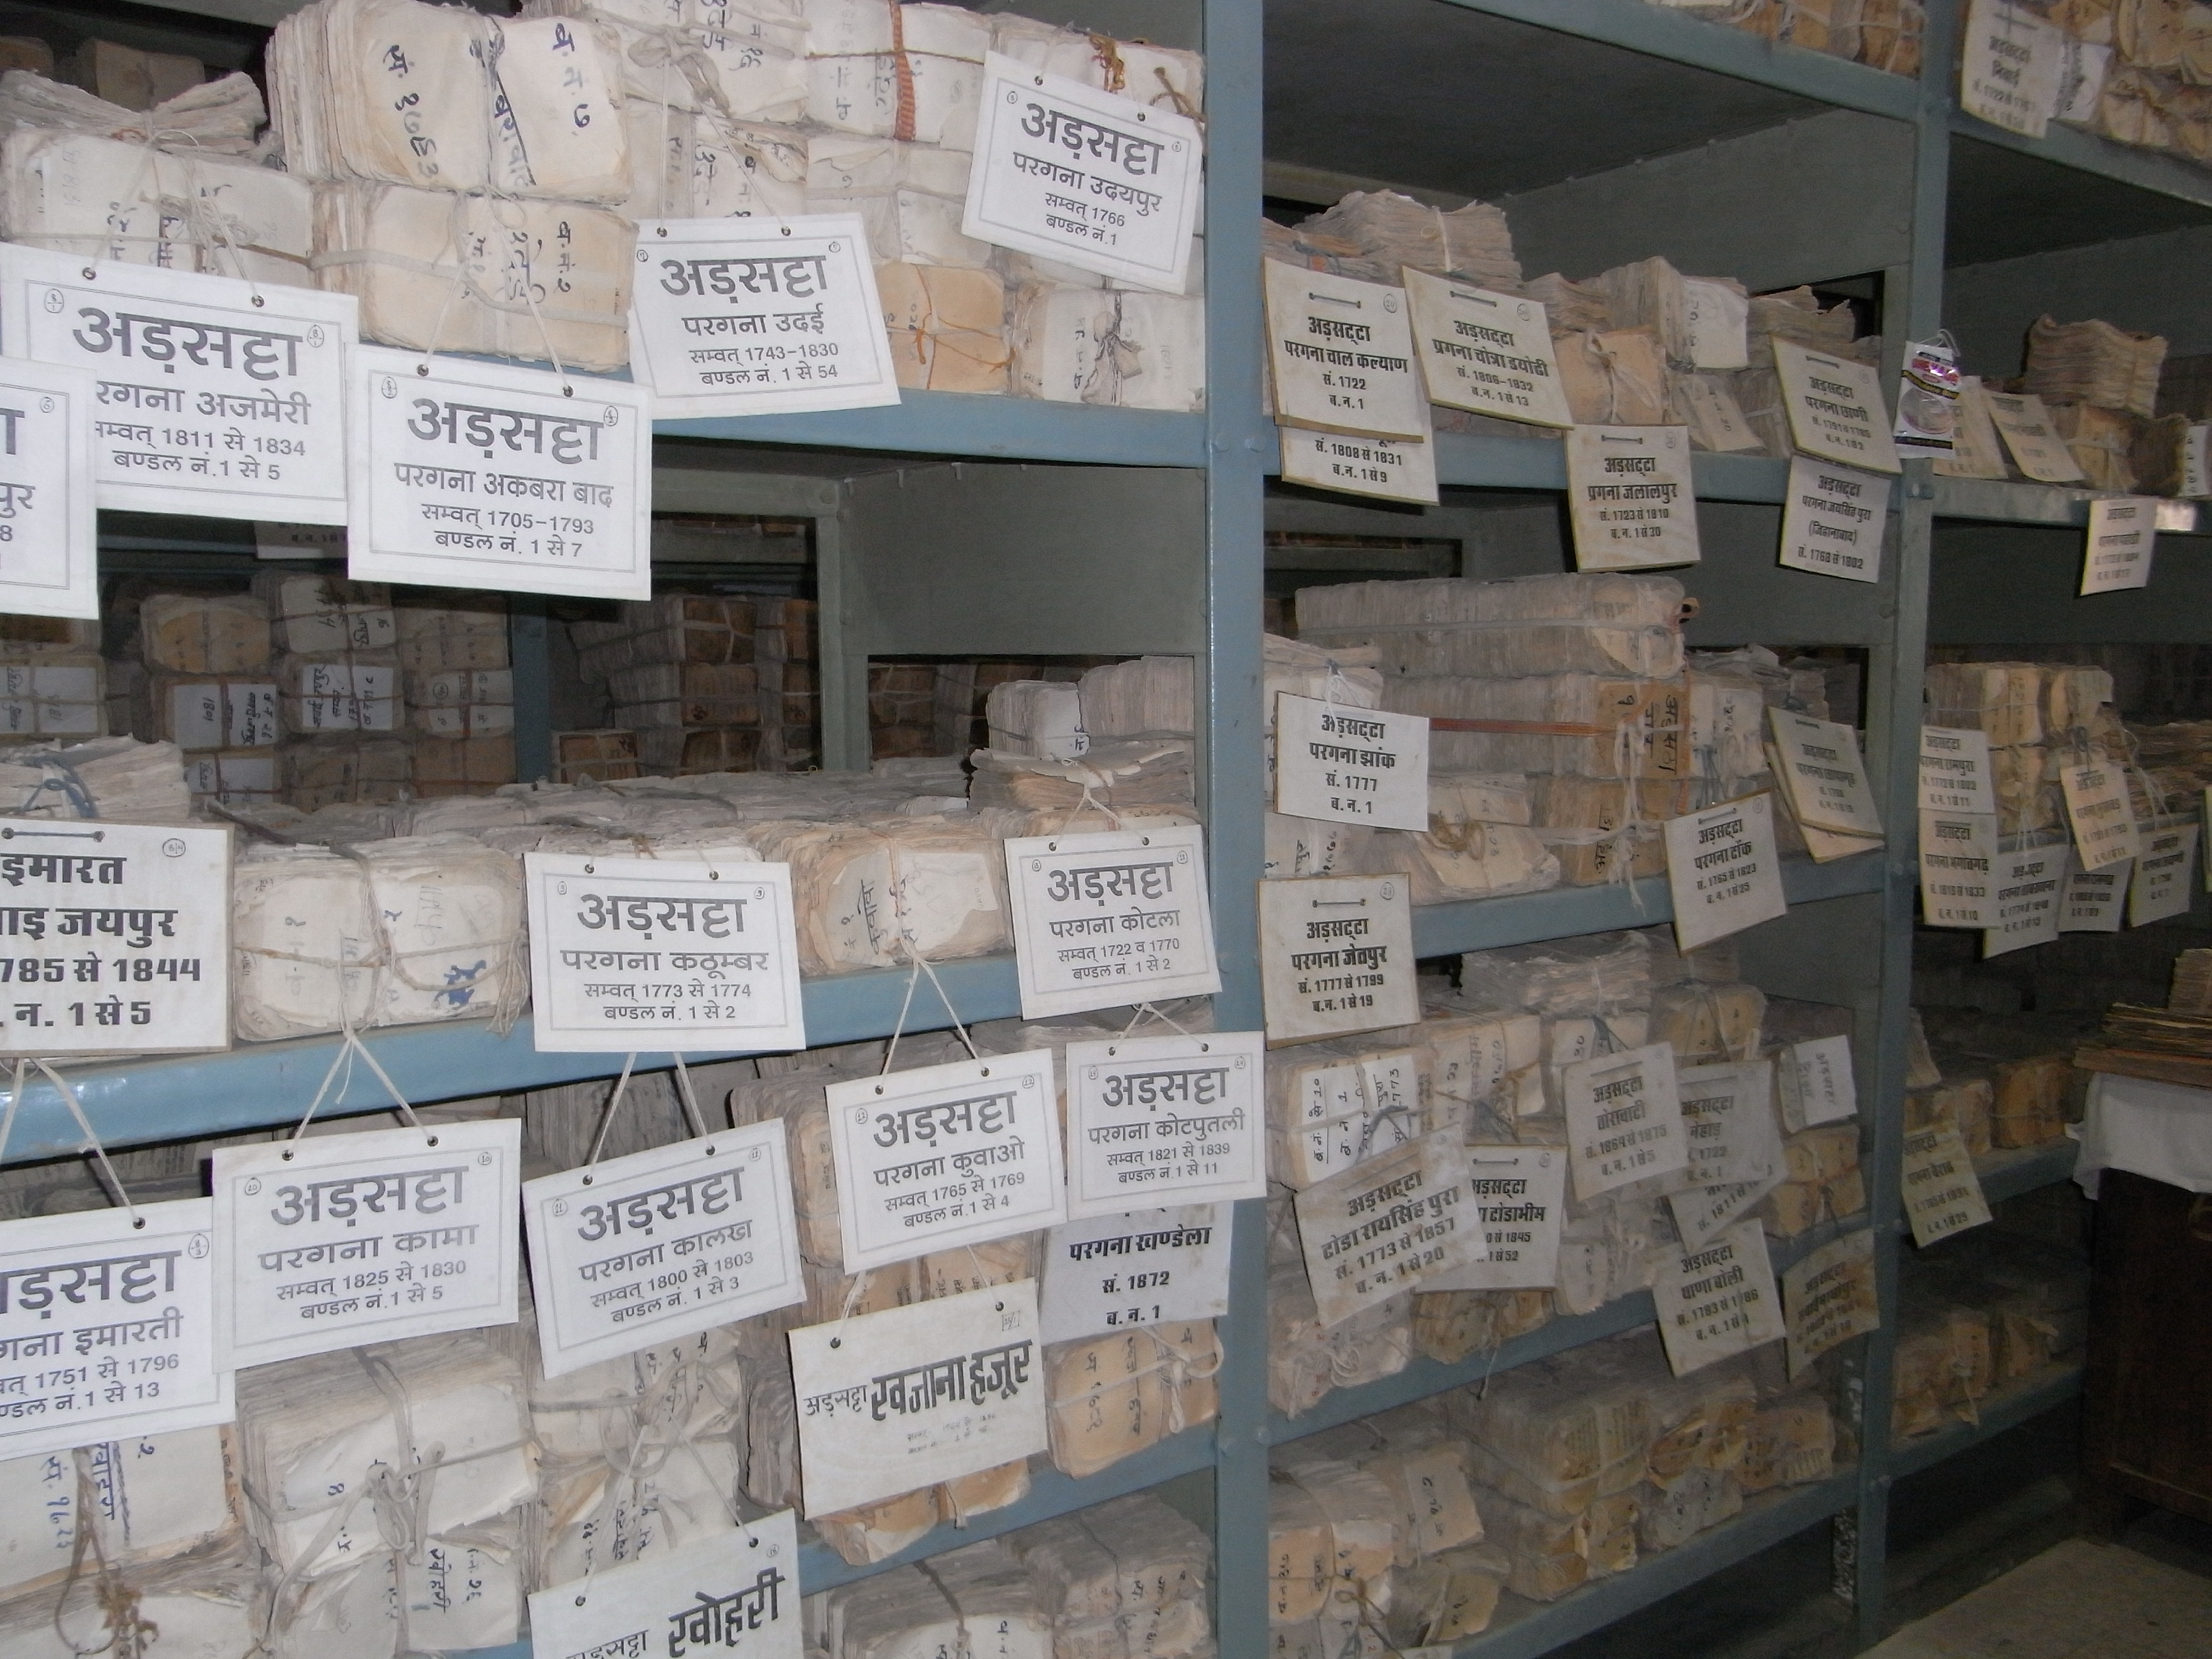 Archives visit at Rajasthan State Archives, Bikaner